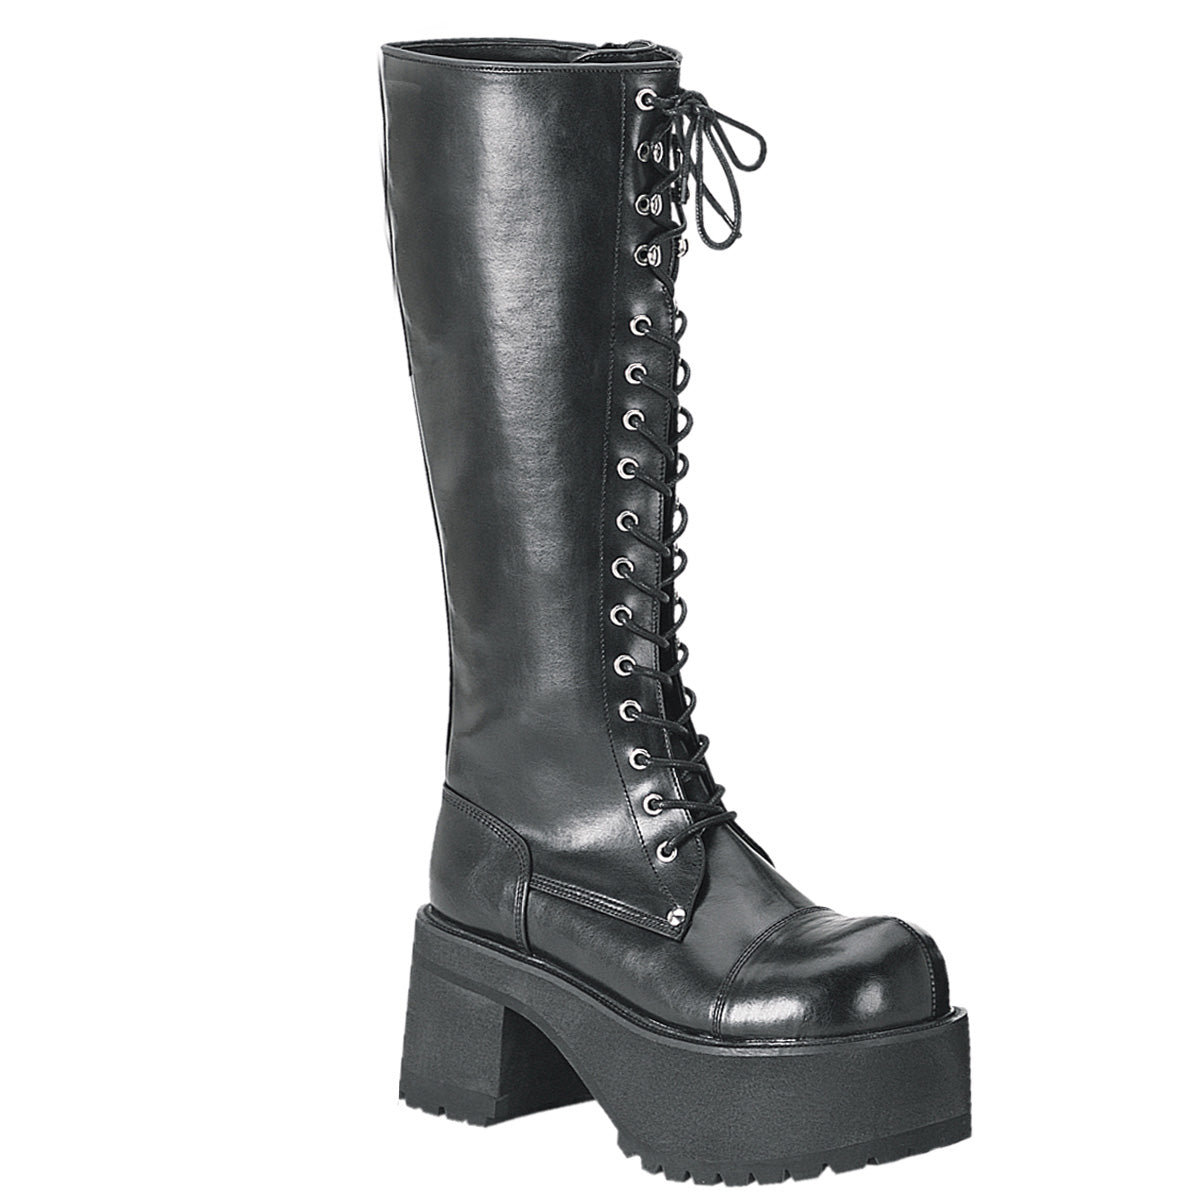 DEMONIA "Ranger-302" Boots - Black Vegan Leather